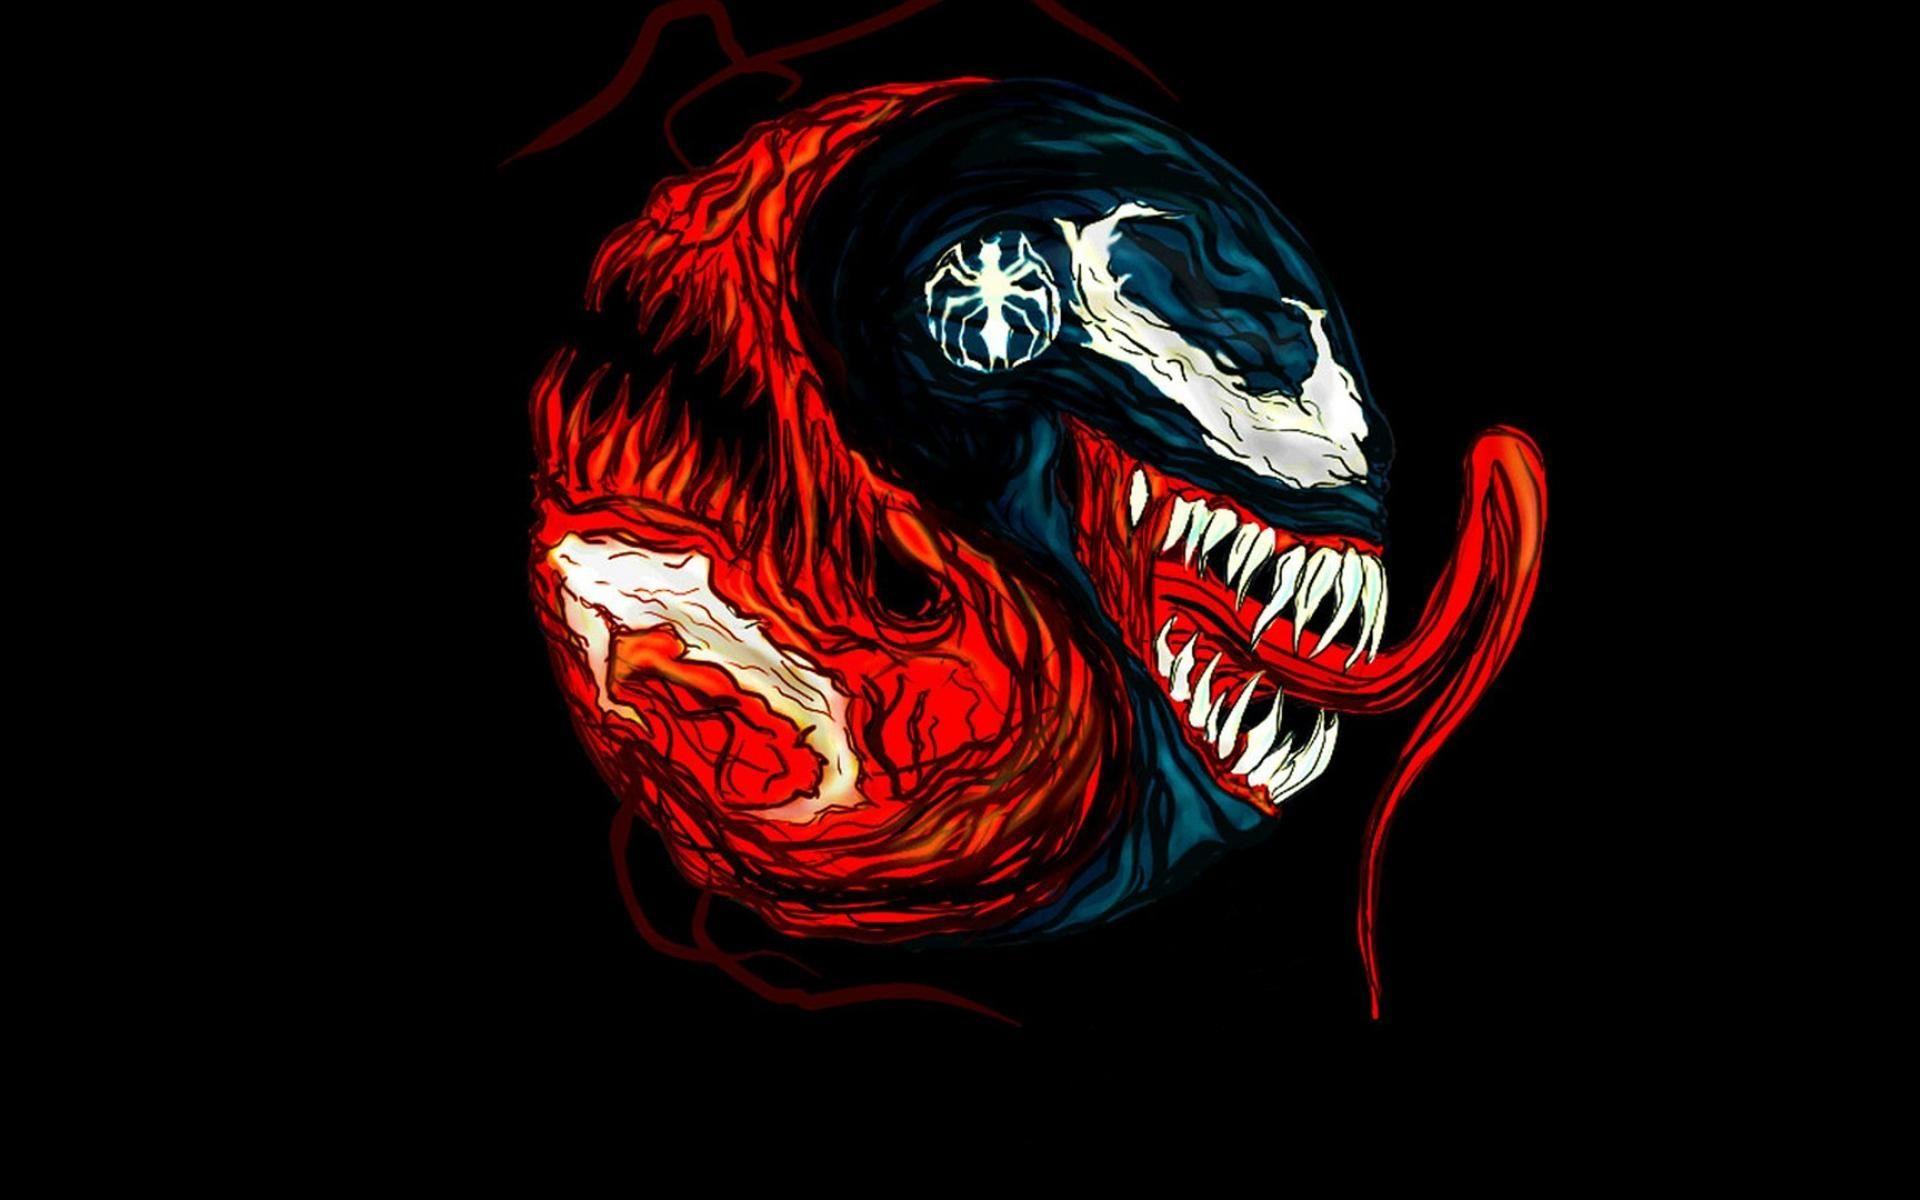 Carnage marvel comics venom black background fan art wallpaper